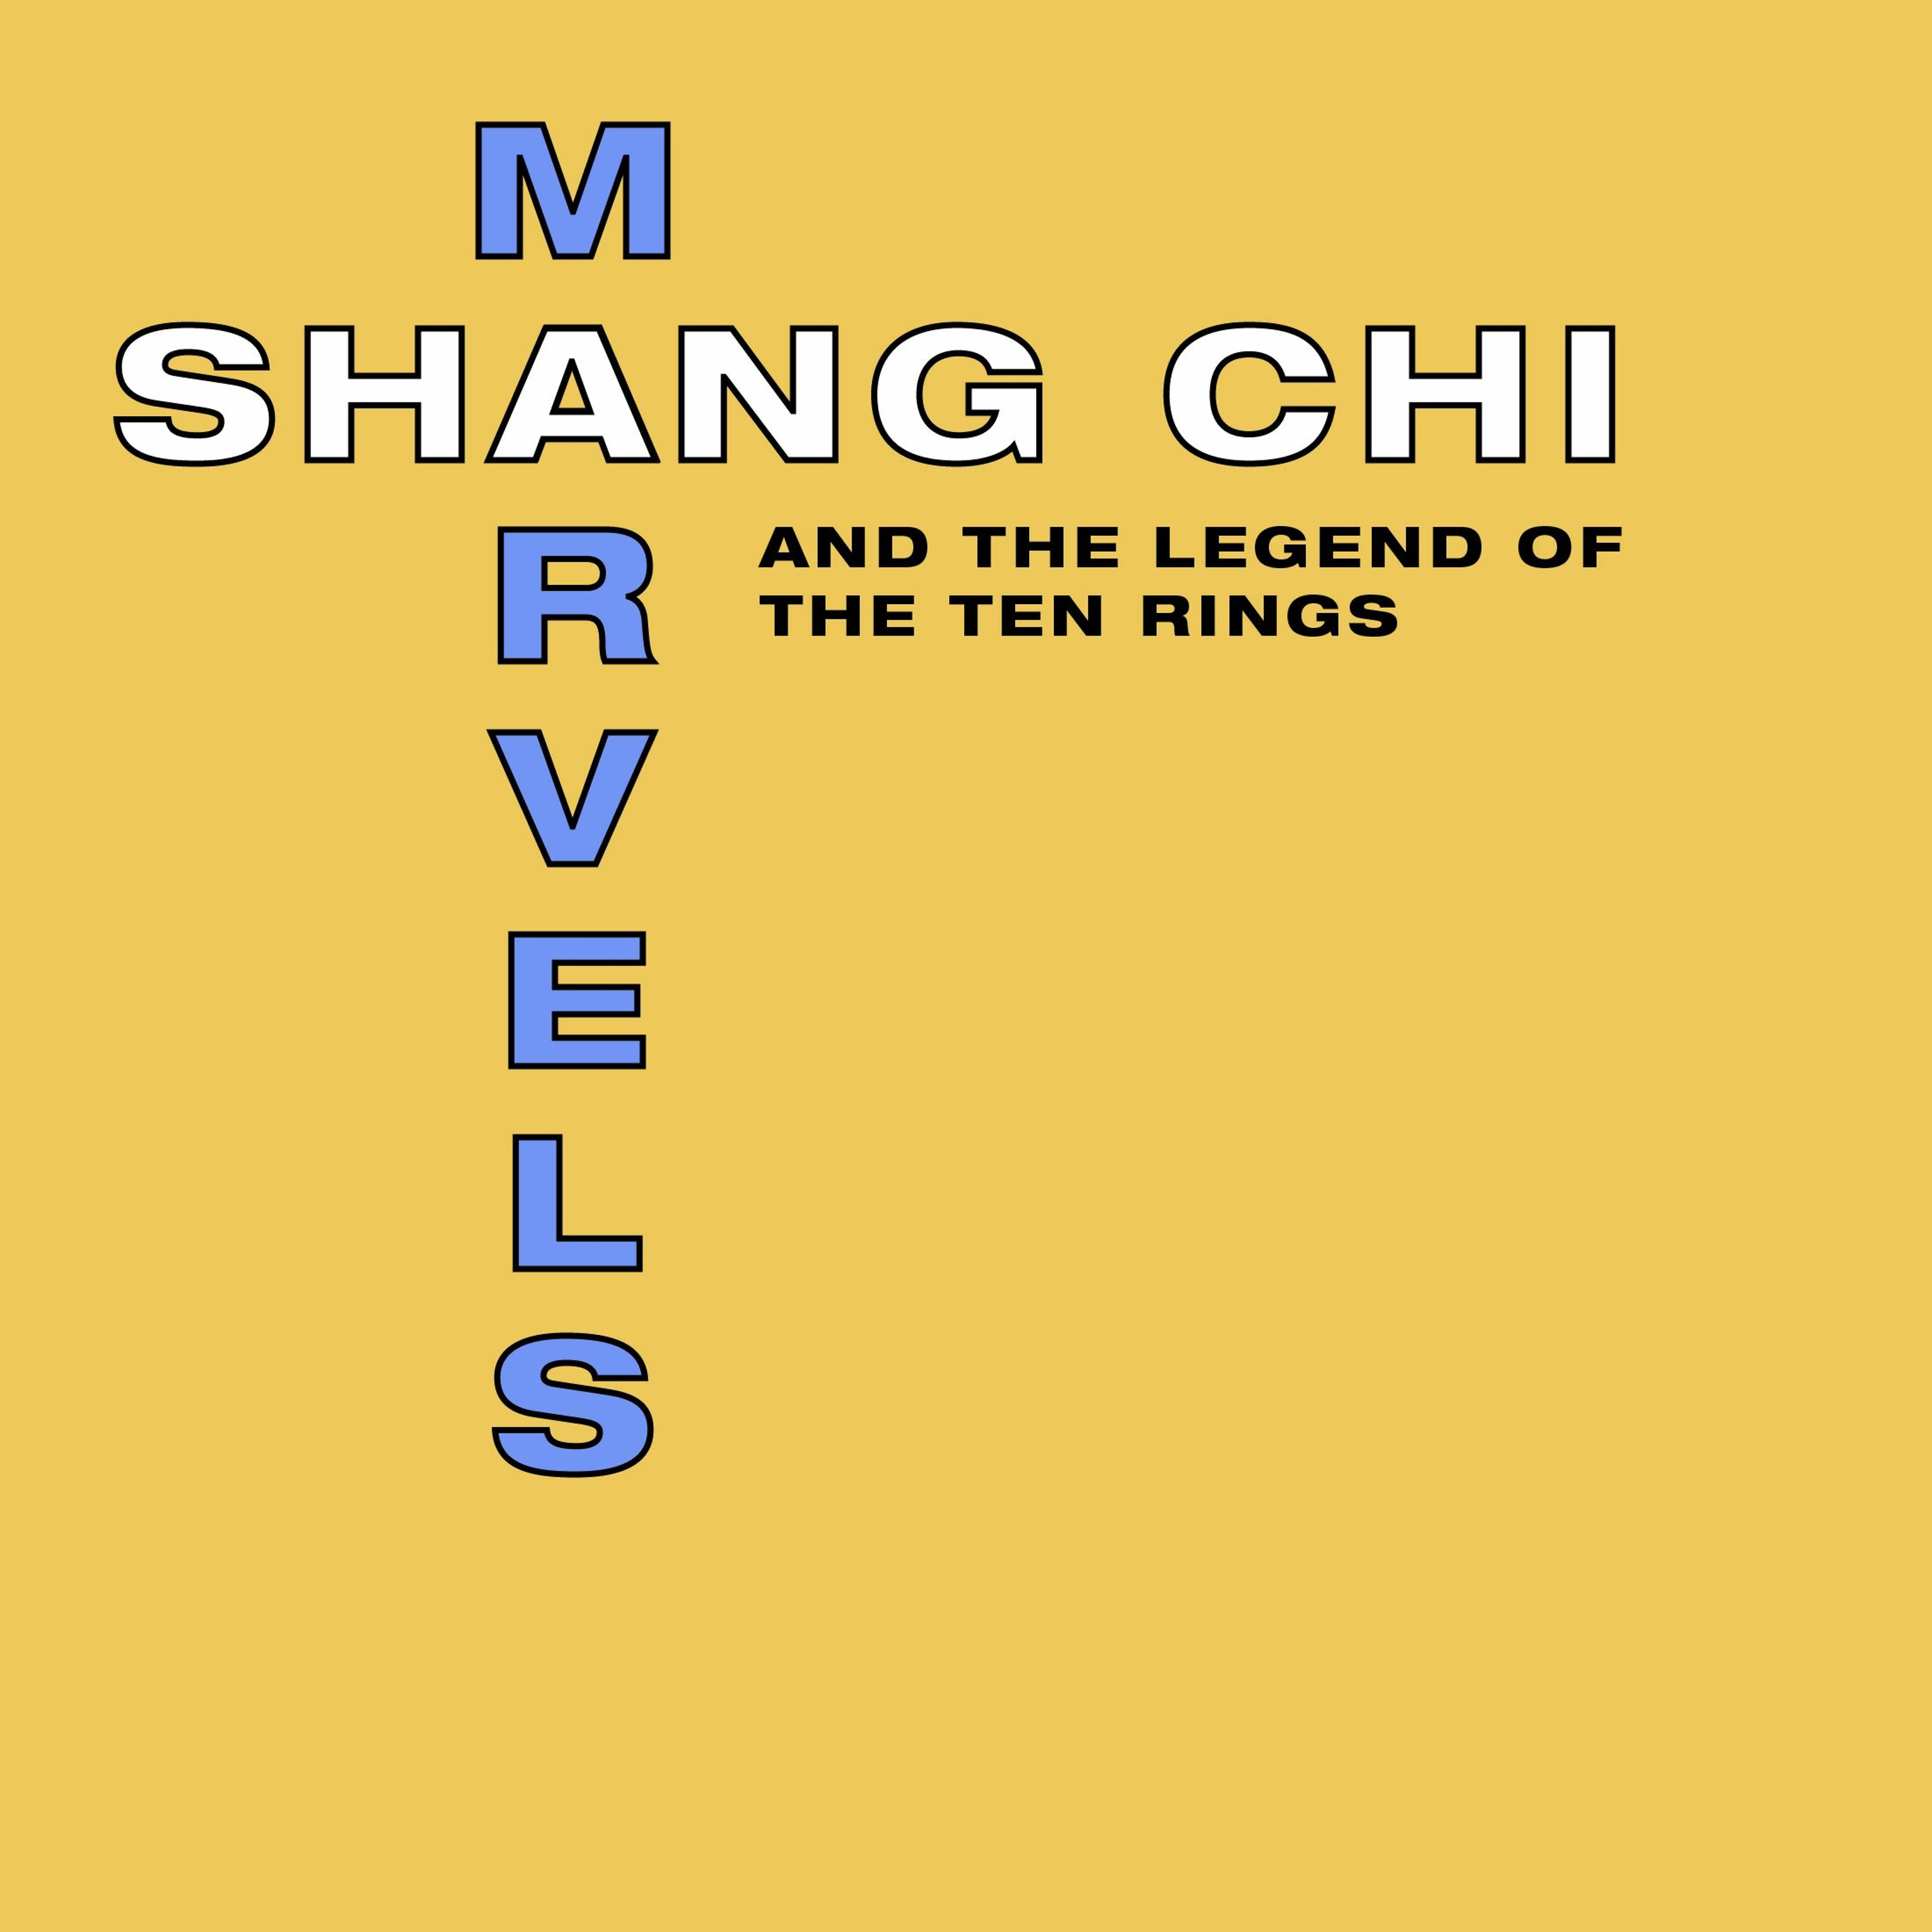 Marvel's Shang Chi: Part 1